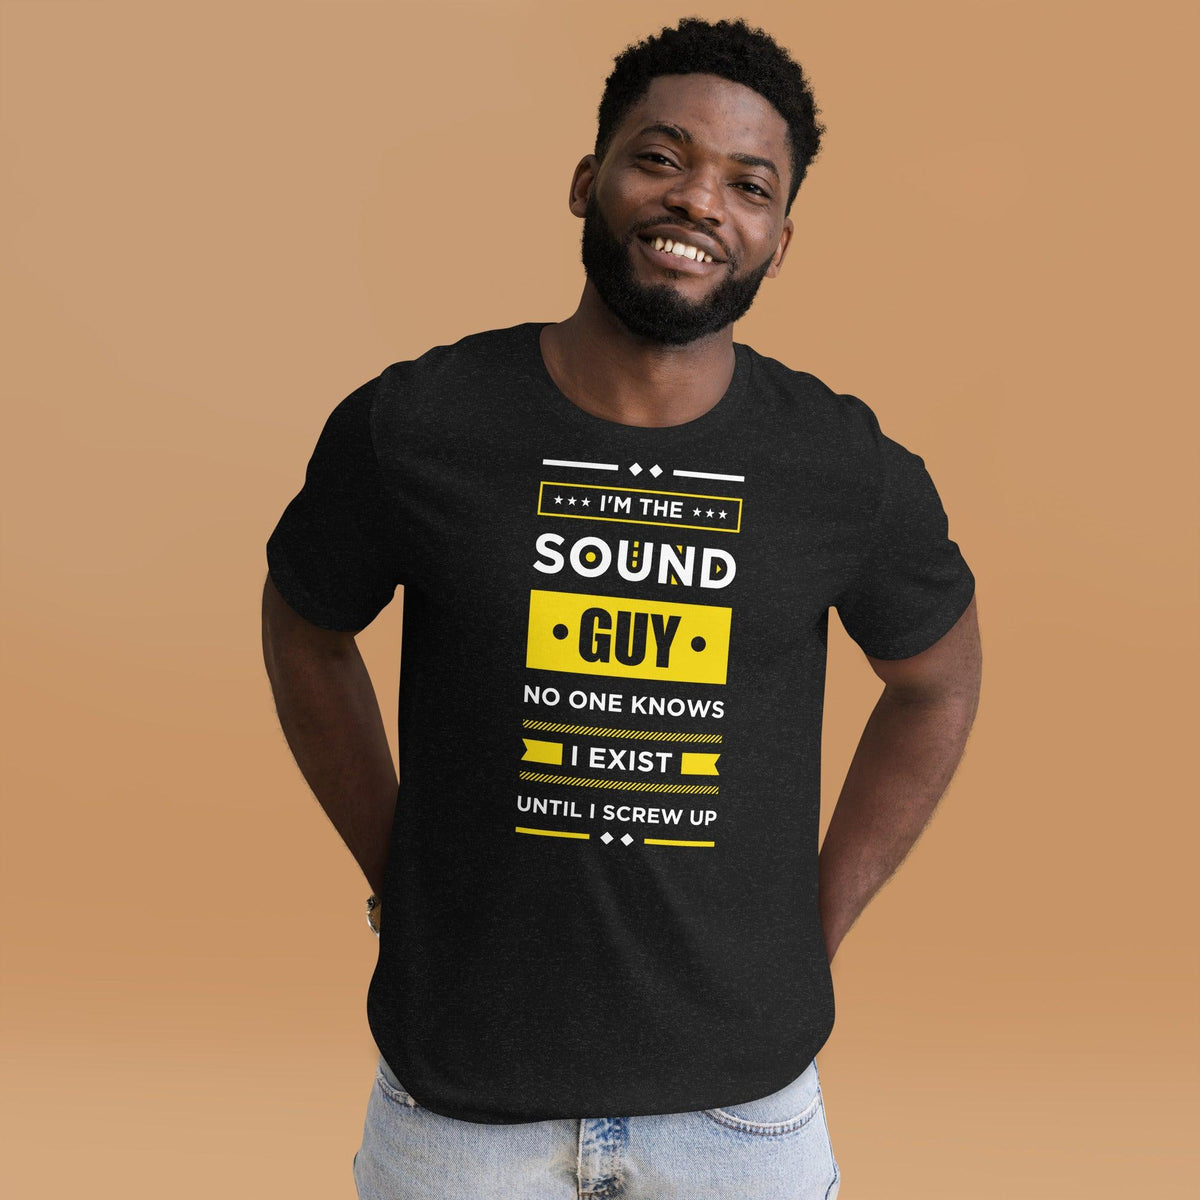 Sound Guy T-Shirt for Sound Engineers & Musicians - Tedeschi Studio, LLC.